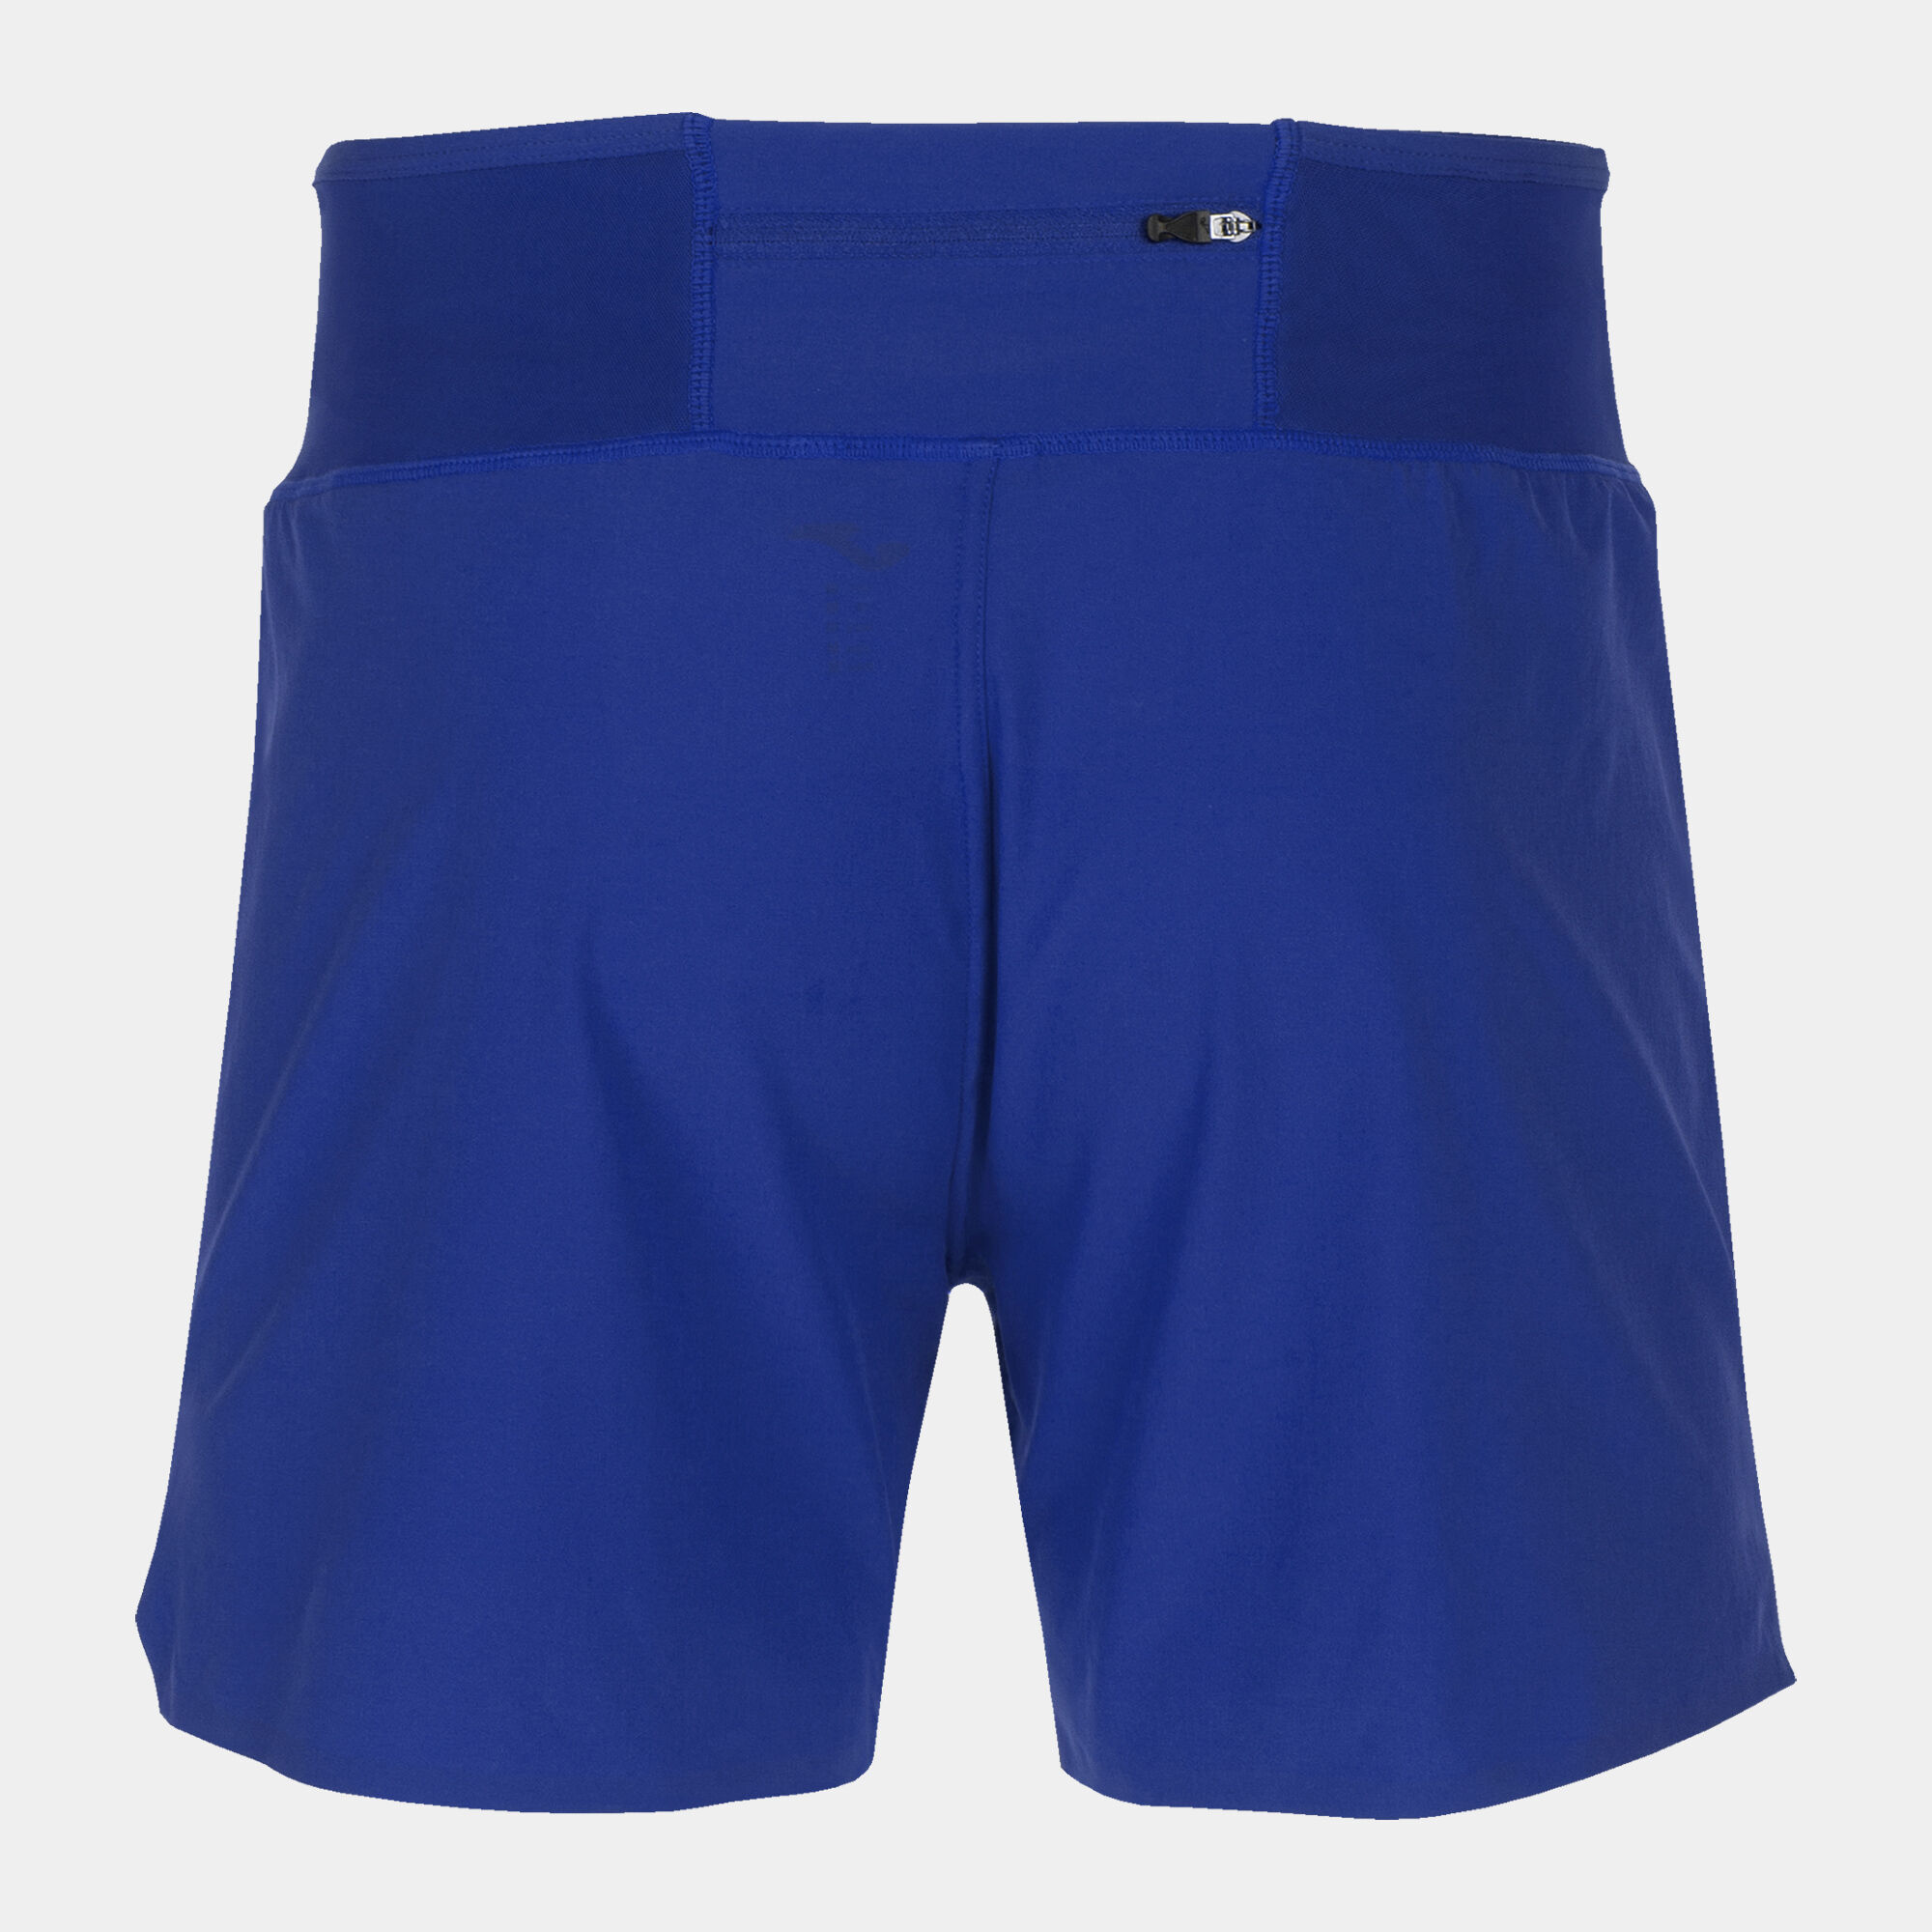 Shorts man R-Combi royal blue